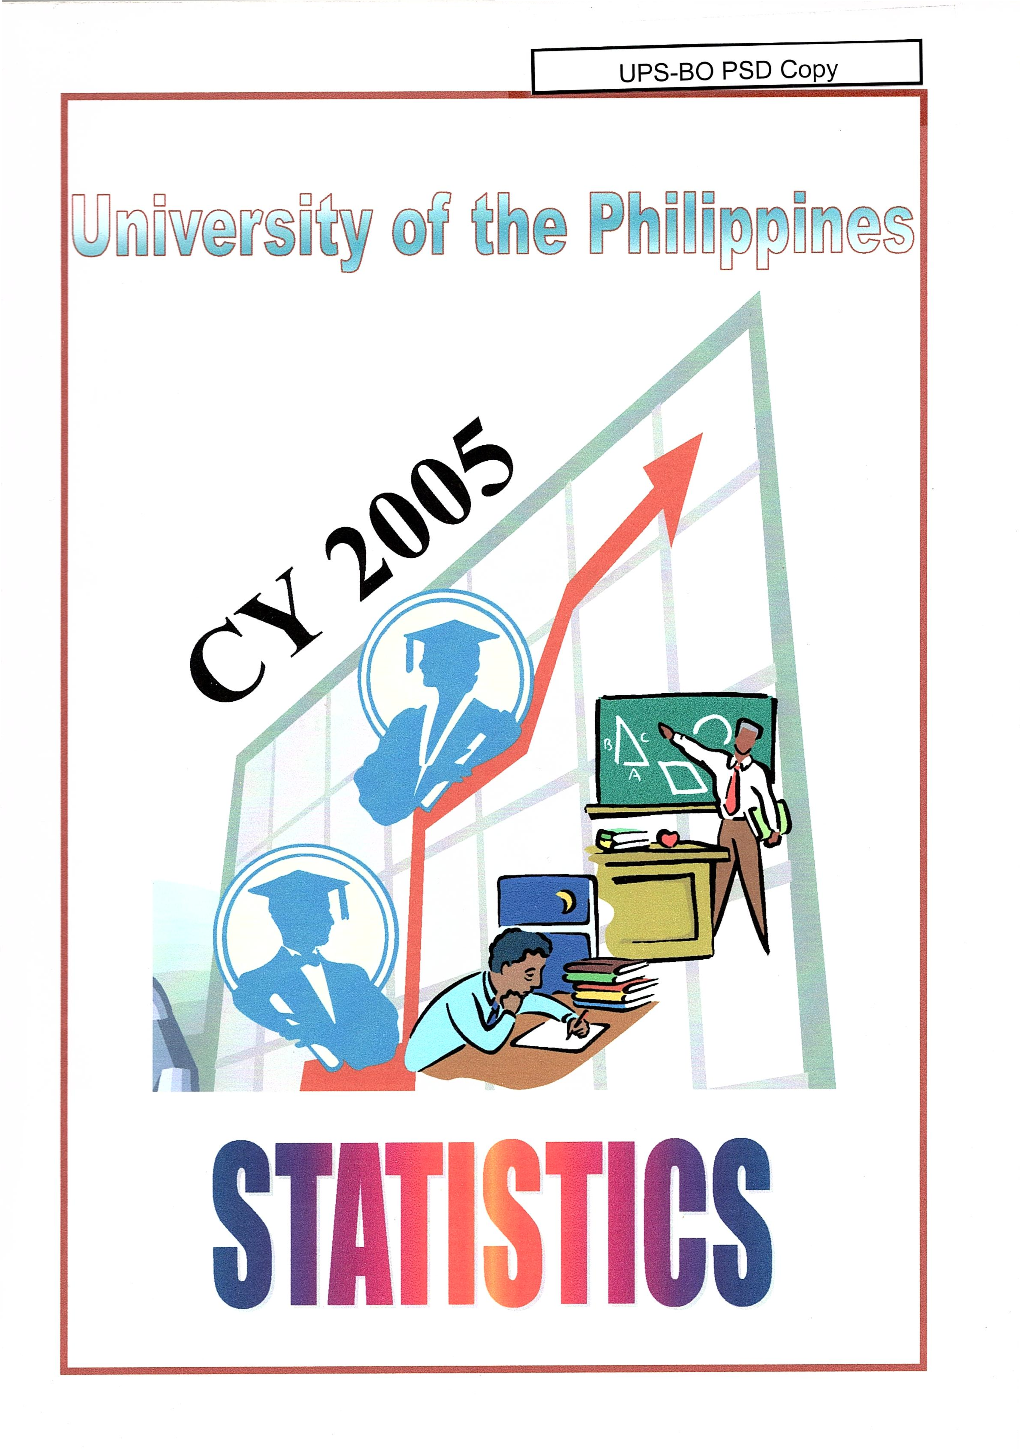 UP Statistics 2005.Pdf